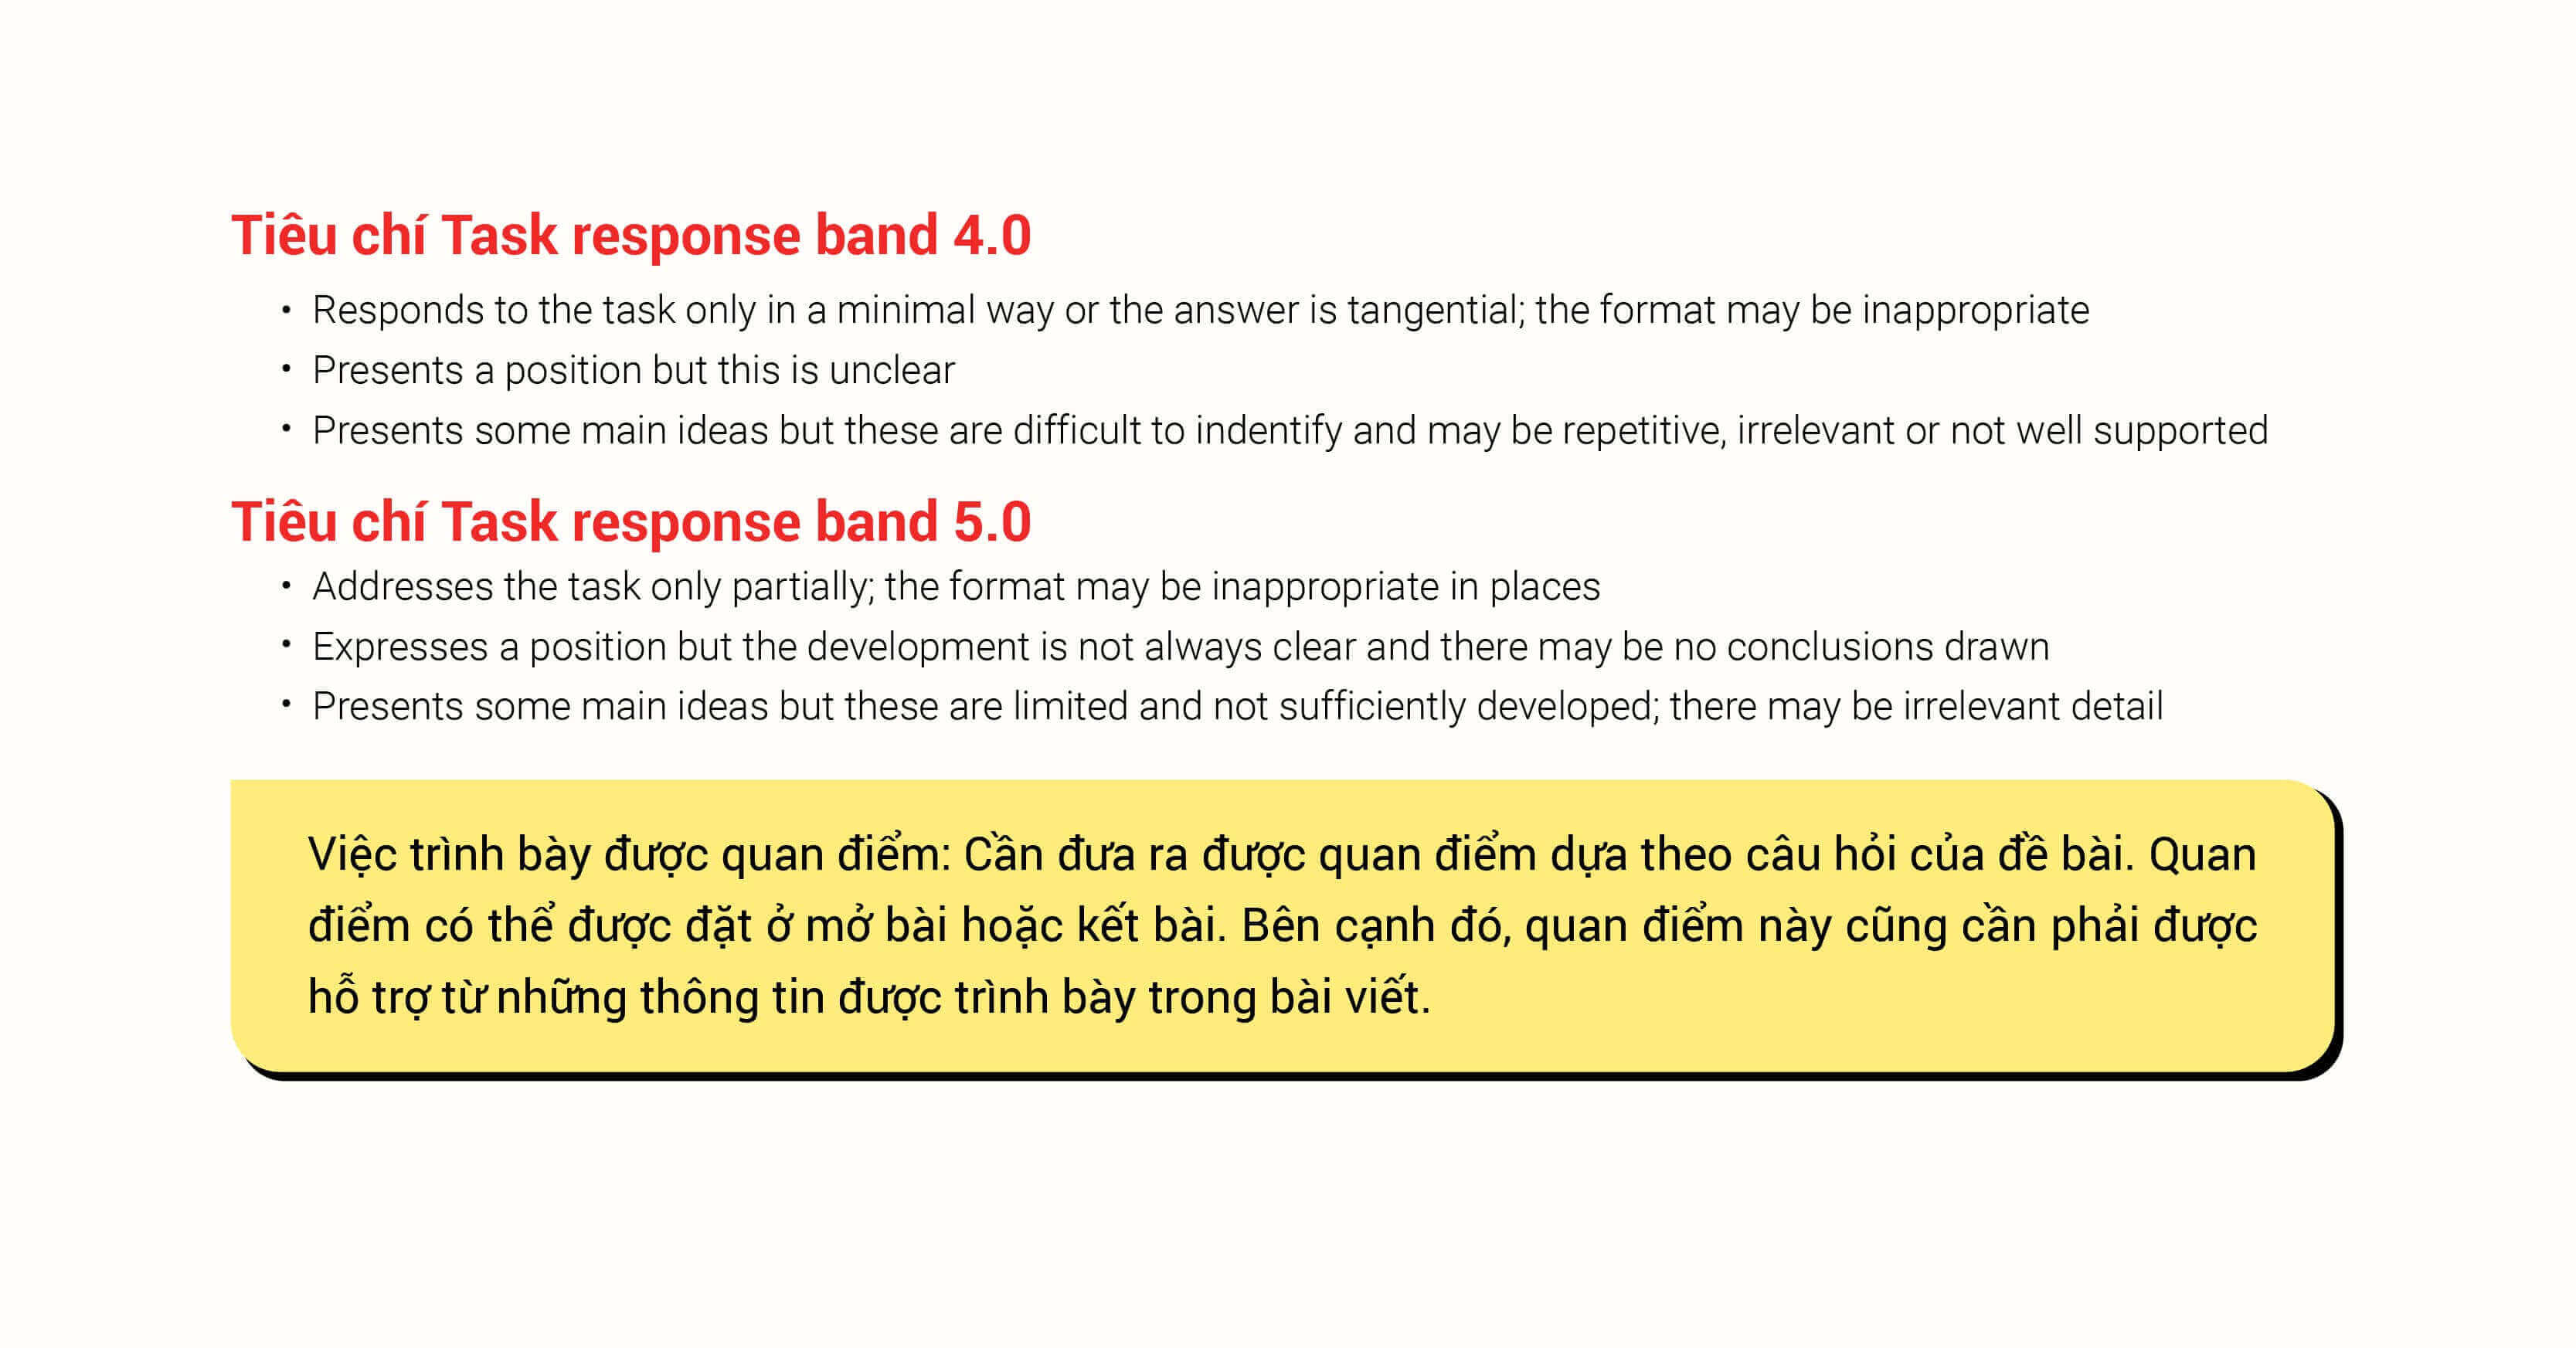 cach-cai-thien-tieu-chi-task-response-doi-voi-dang-bai-advantages-and-disadvantages-cho-band-diem-tu-40-len-50